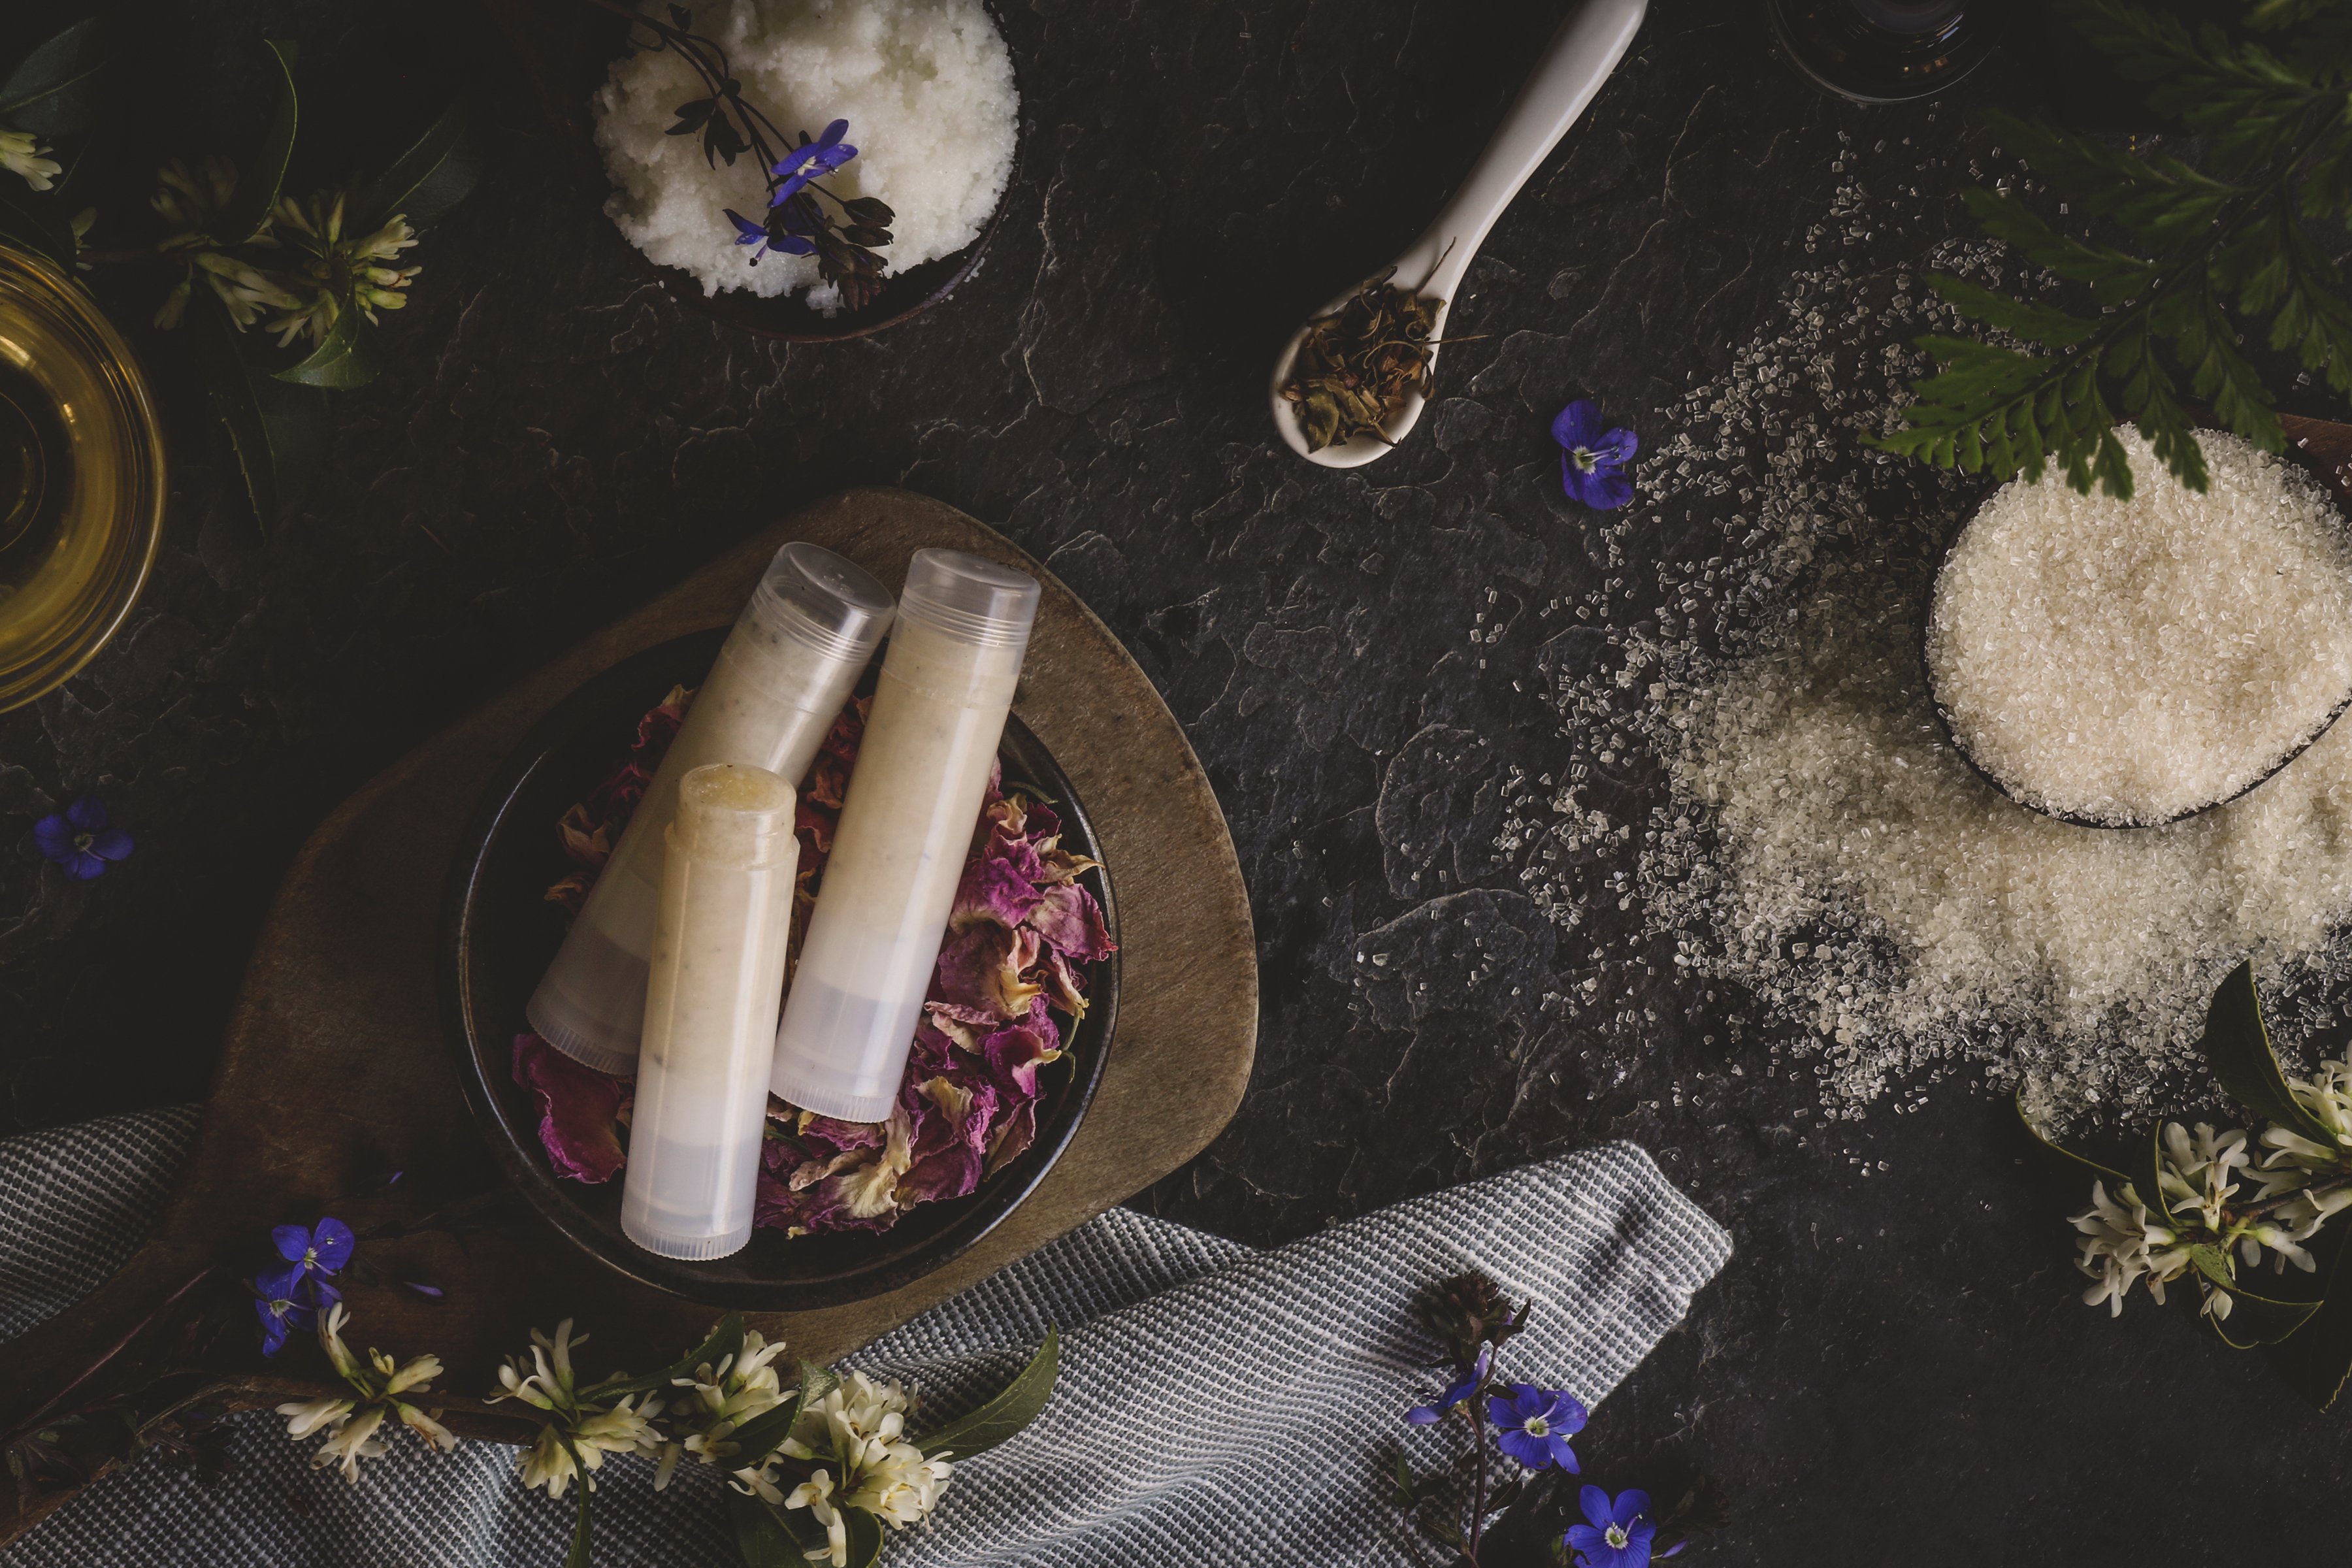 Display of lip balm tubes, salts, DIY ingredients and small purple flowers. 